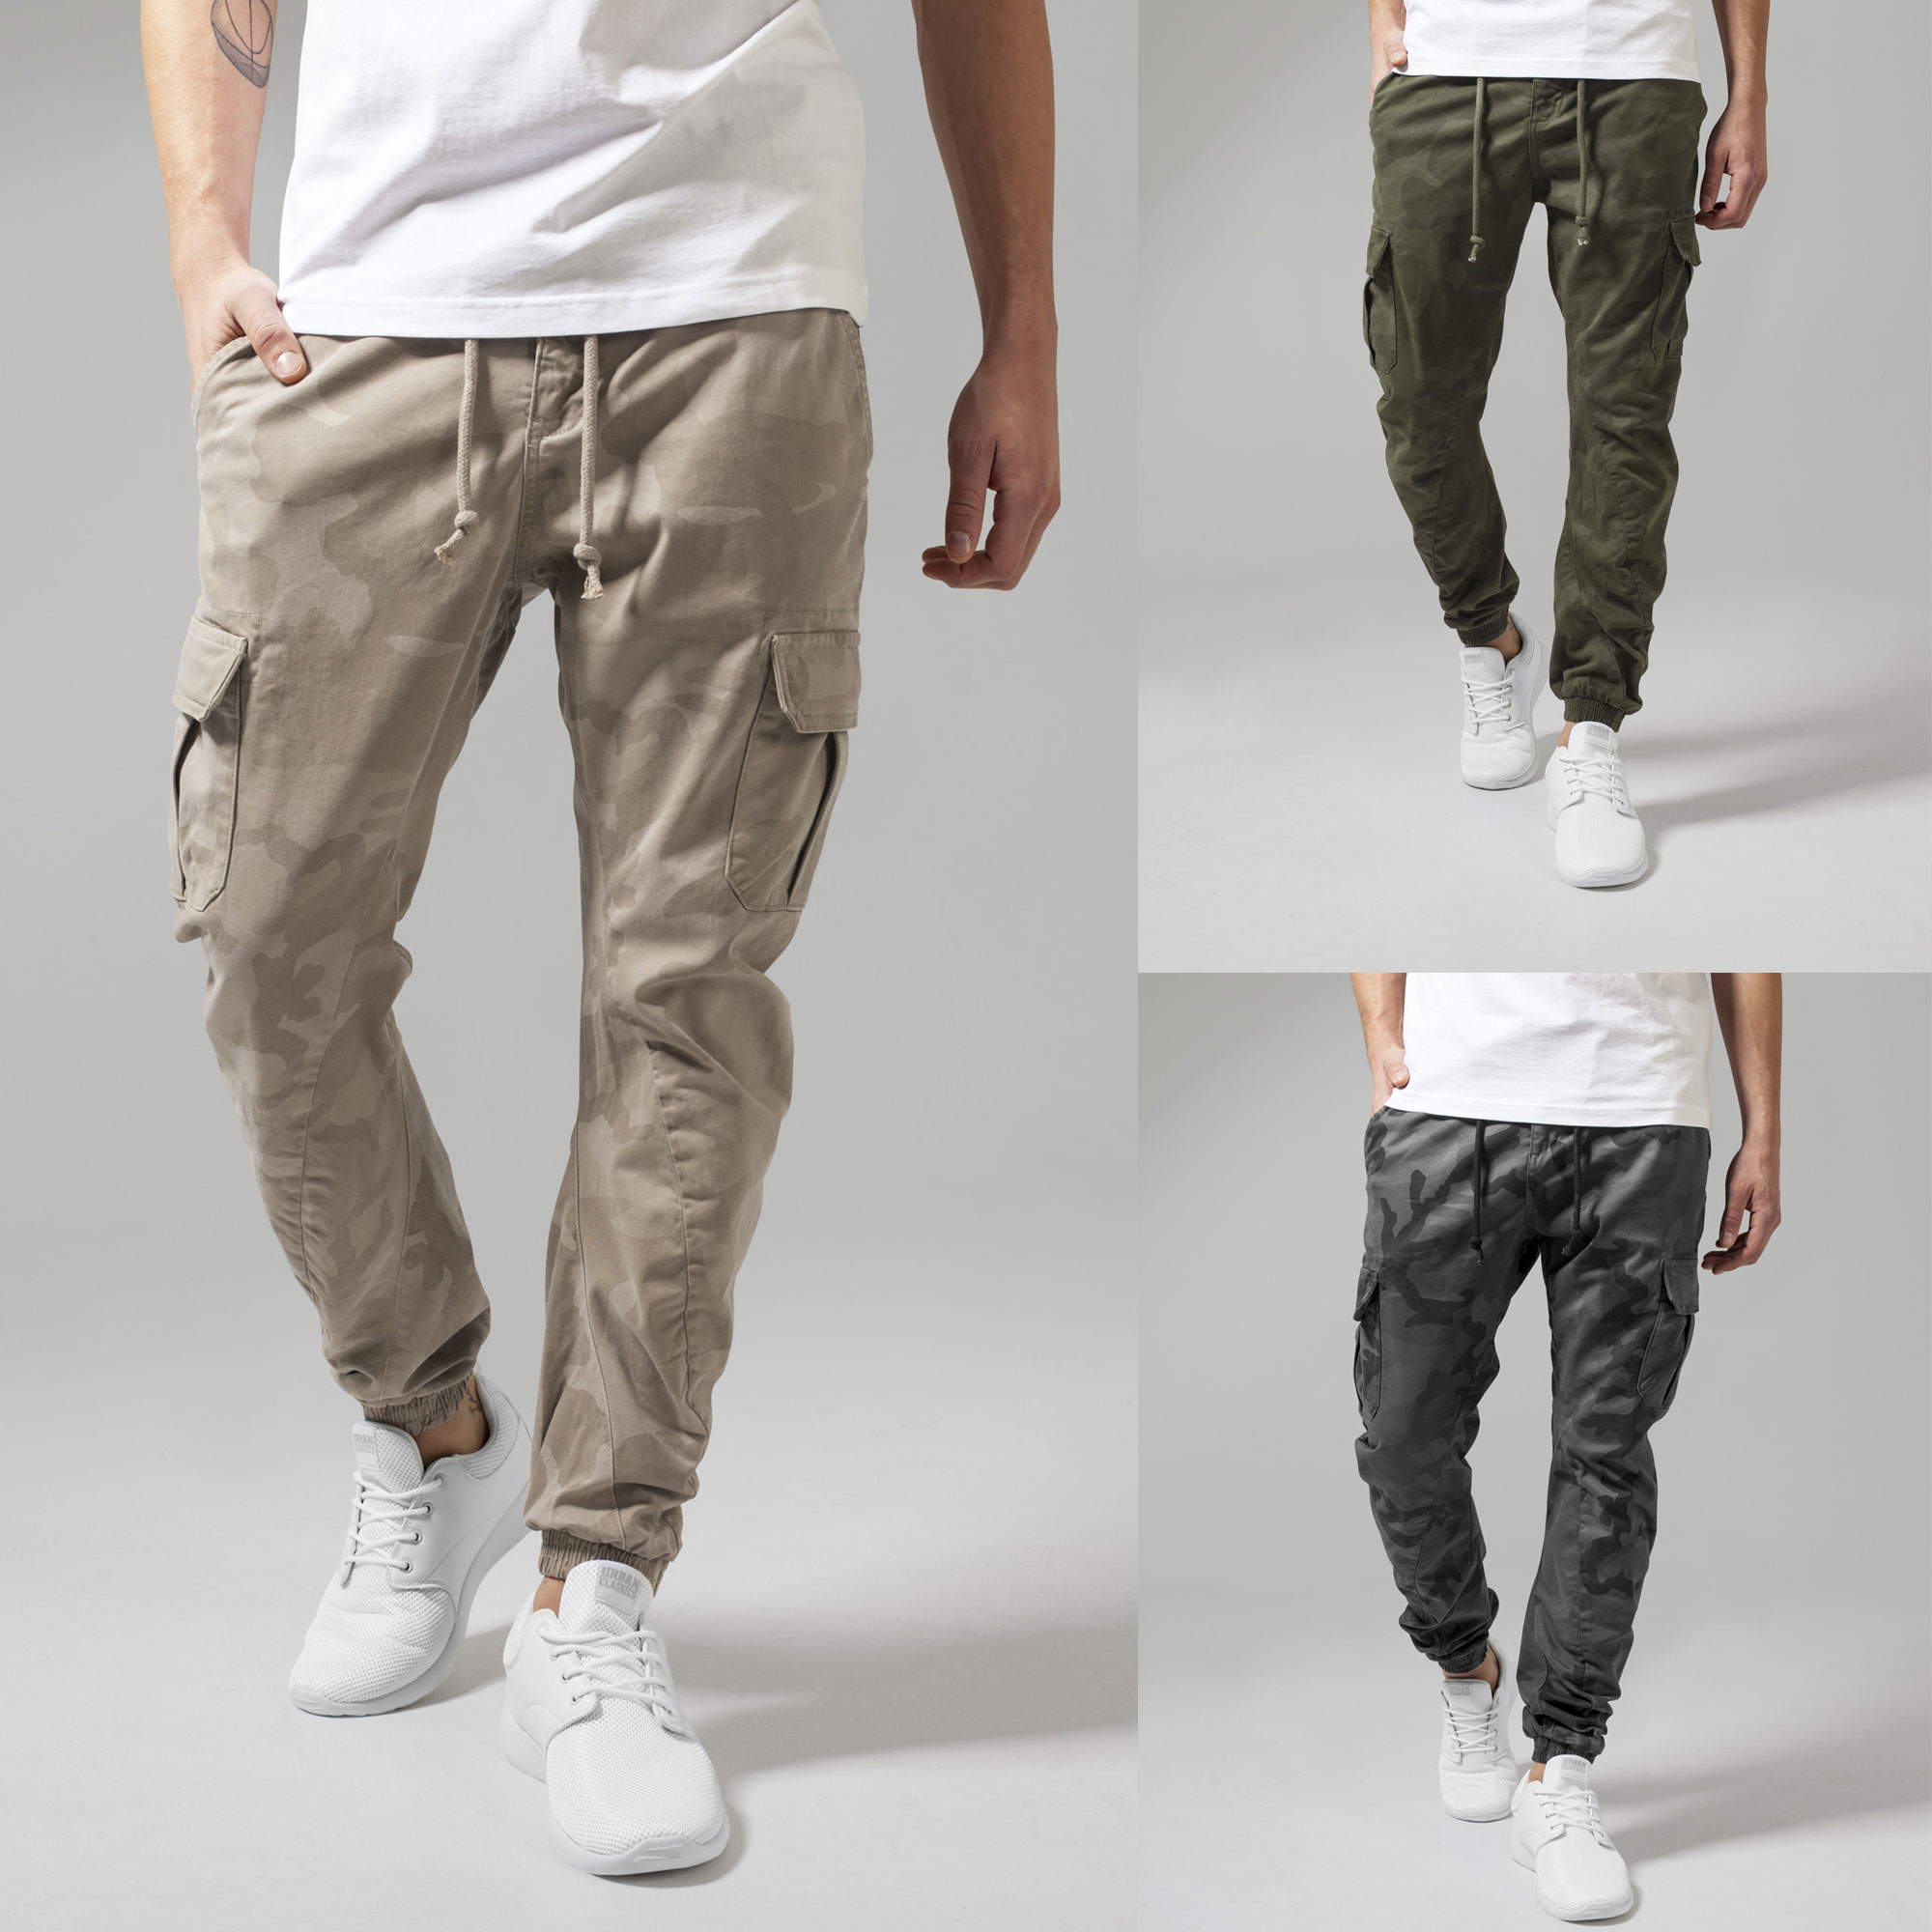 Urban Classics Mens Camo Cargo Chino Pants Tube | Pants Jeans Jogging Sweatpant eBay